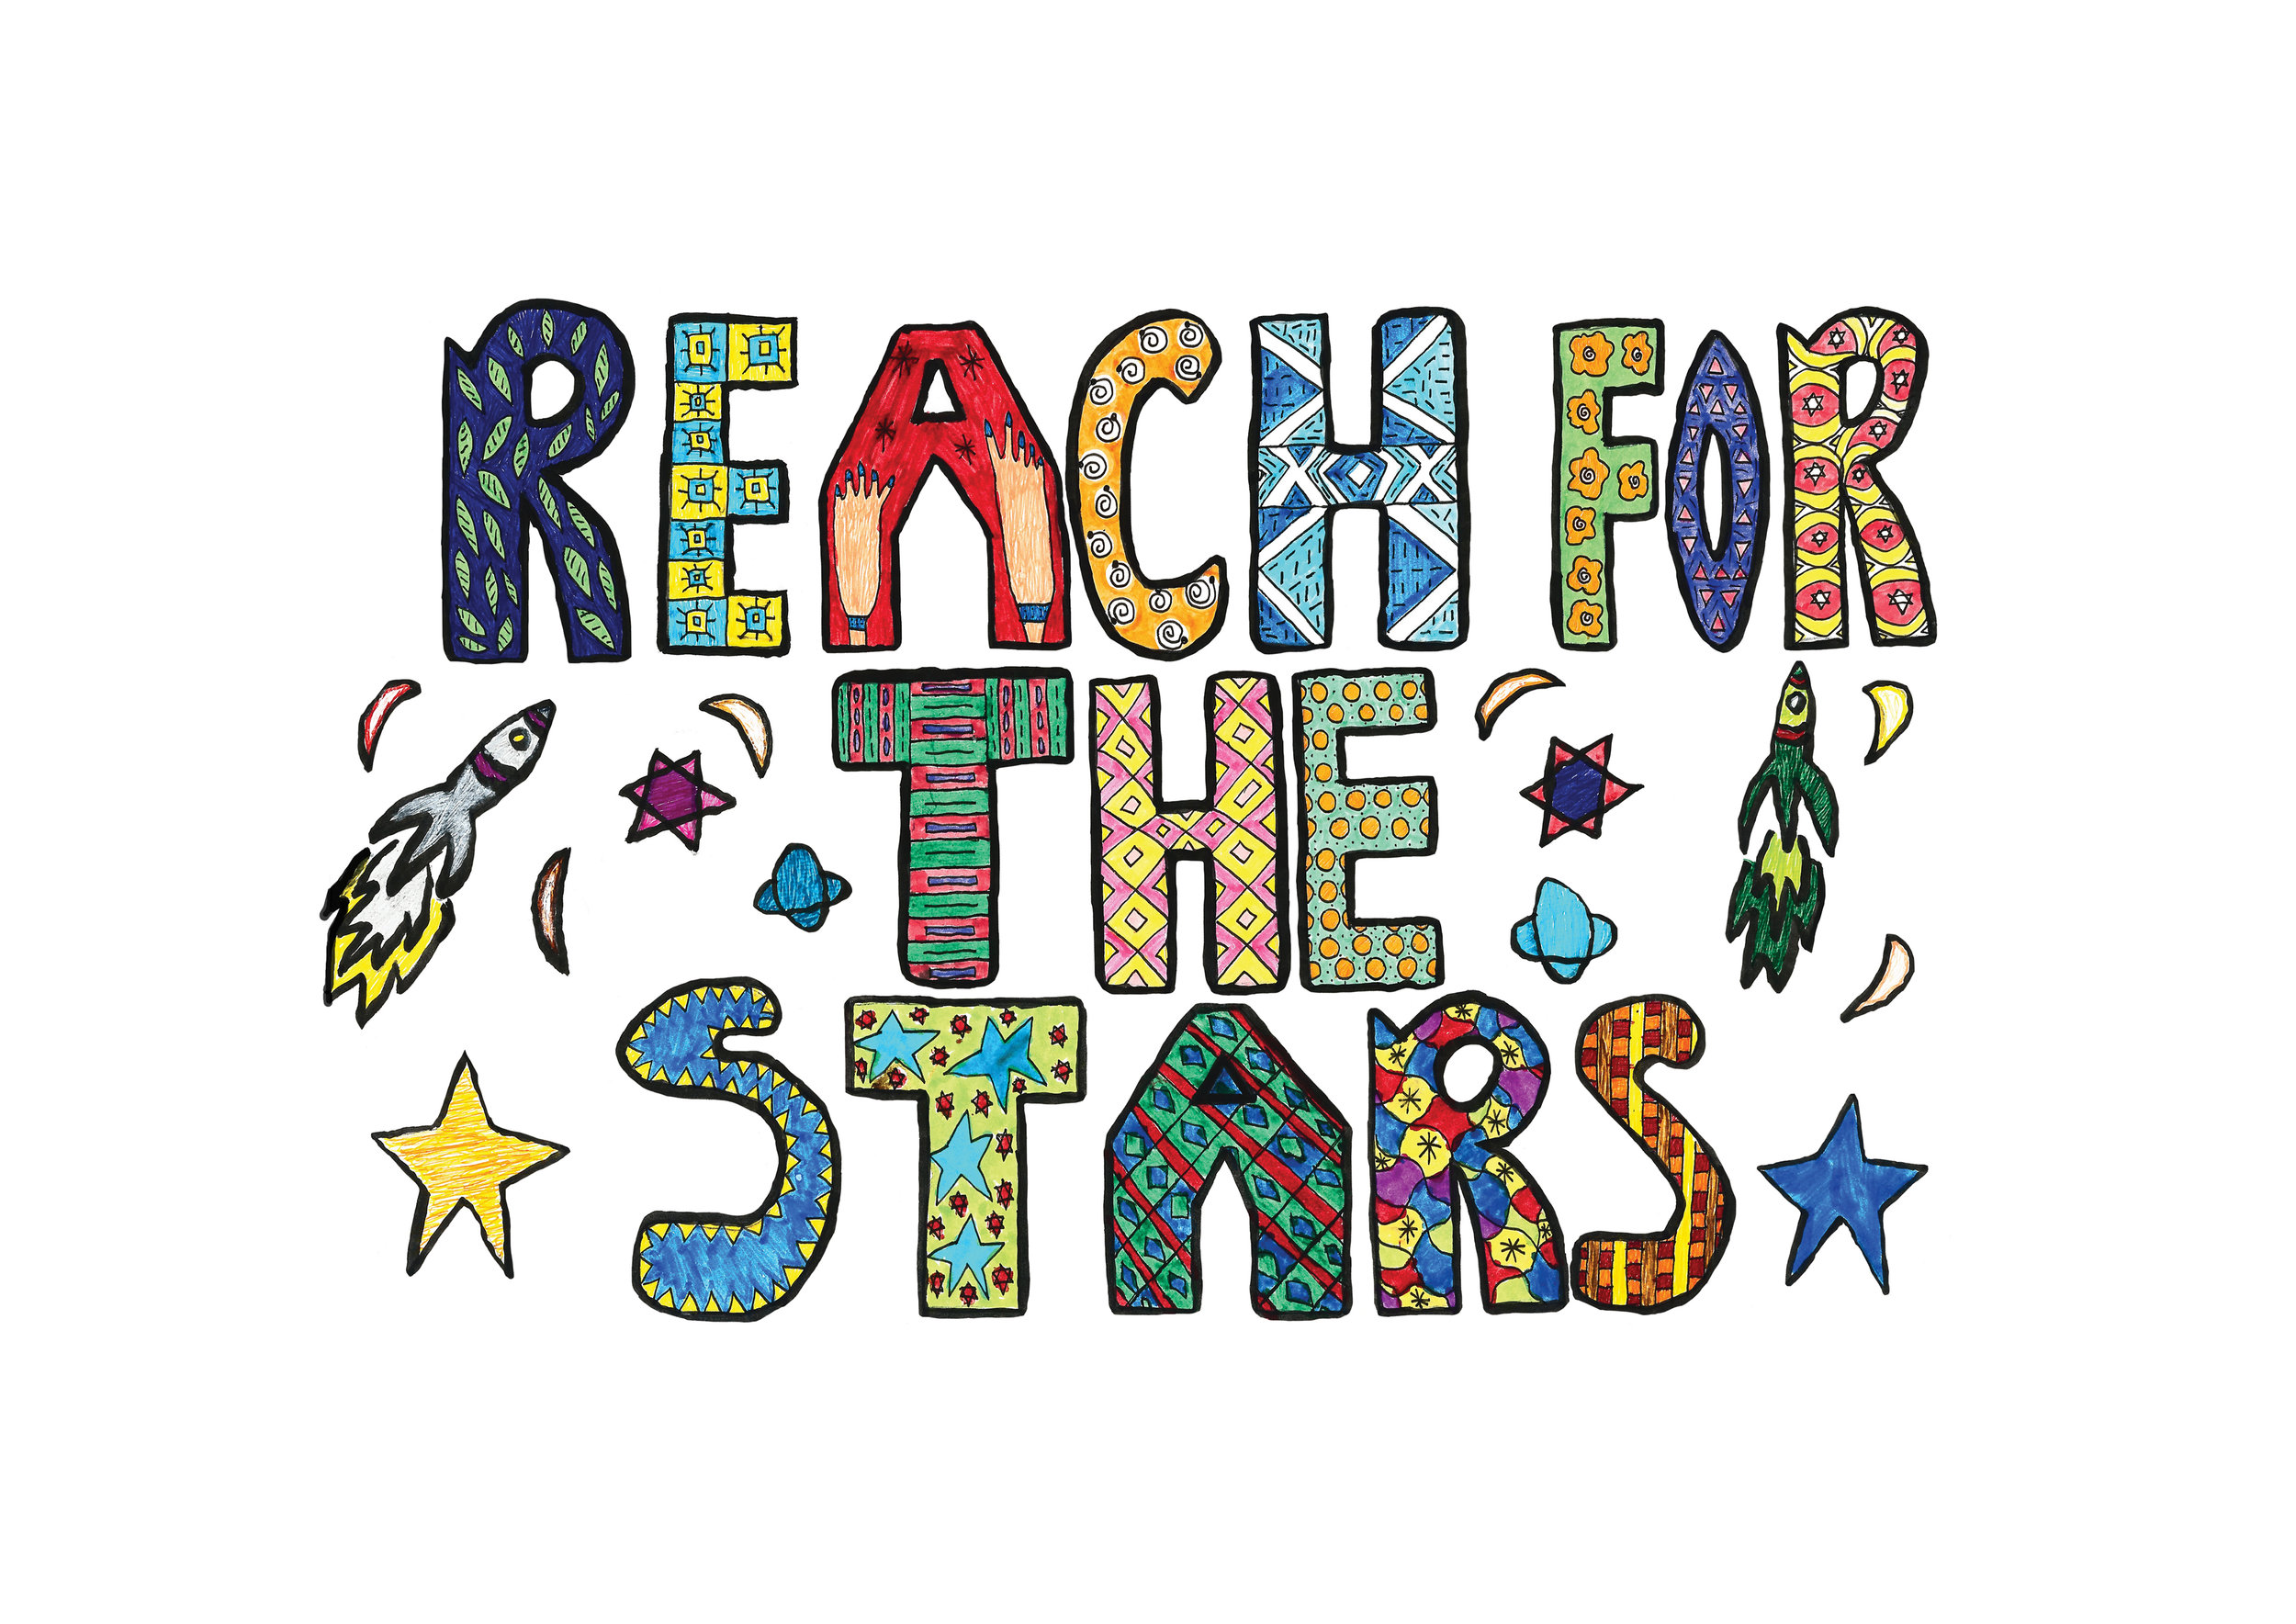 Reach for the stars2017.jpg